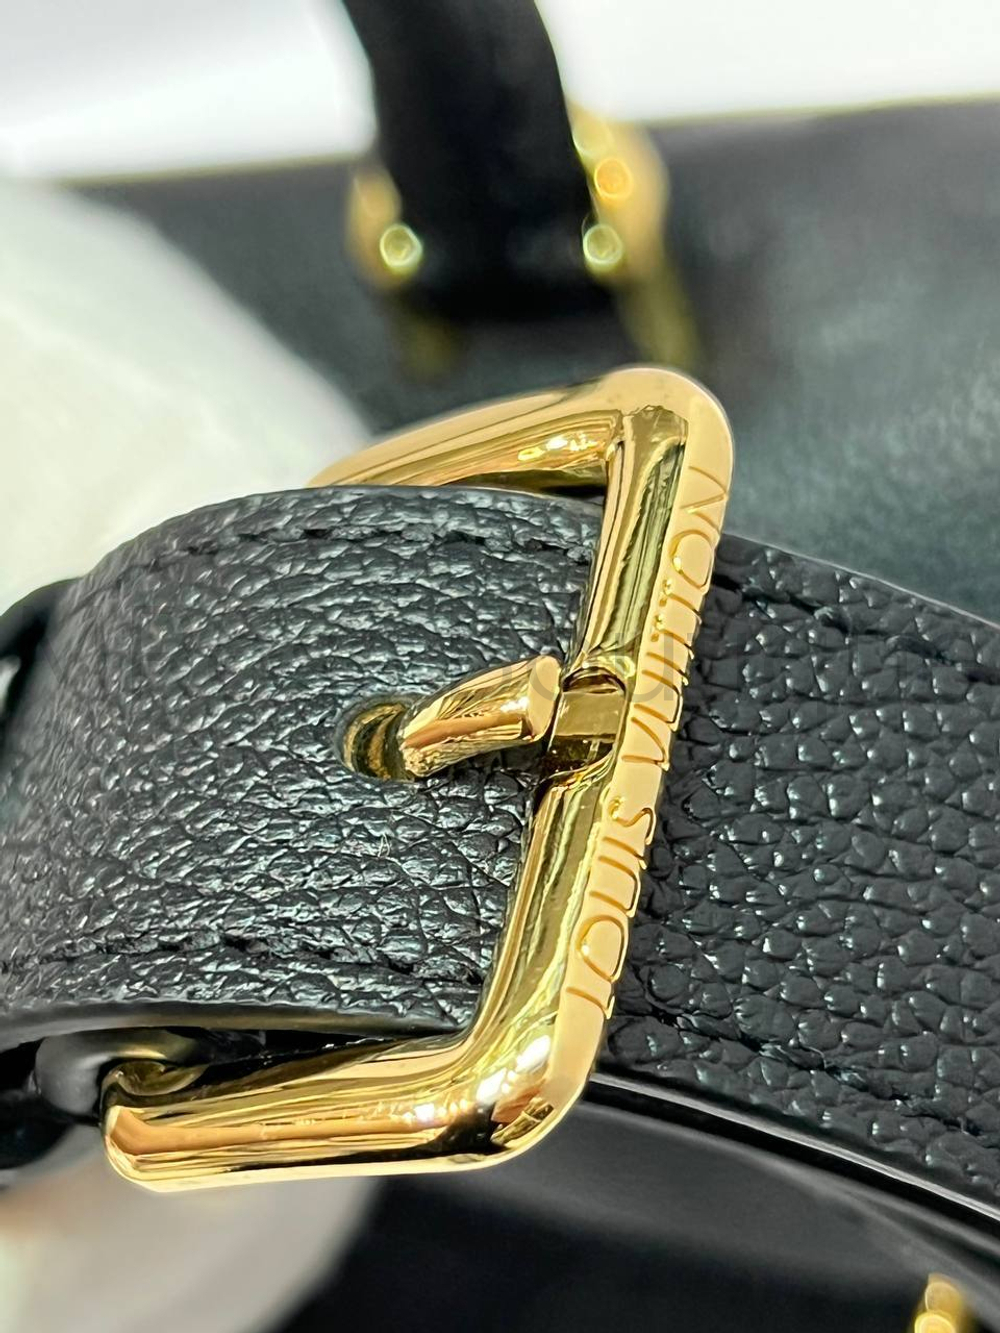 Черная сумка Madeleine Louis Vuitton (Луи Виттон) премиум класса